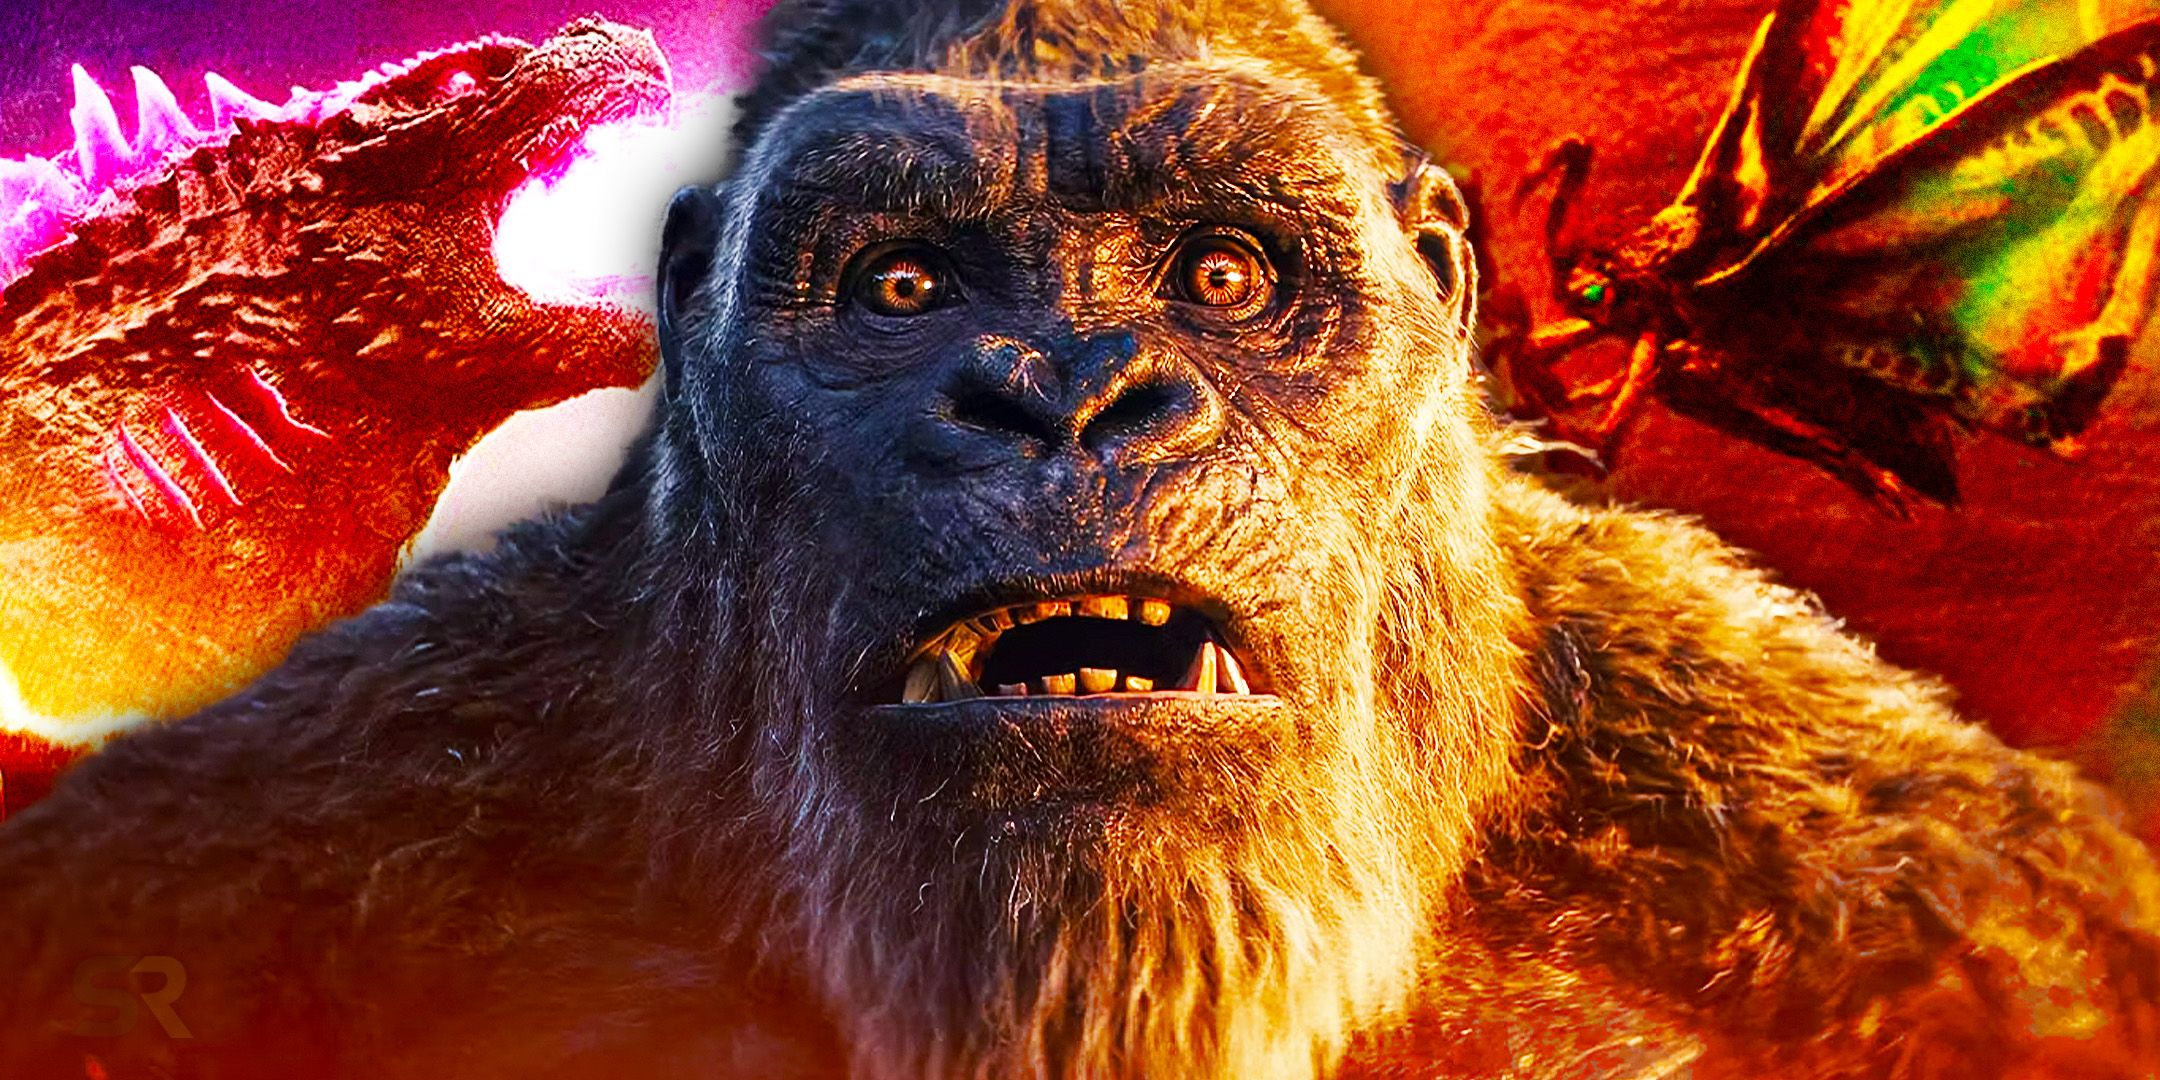 Godzilla x Kong Scene Paid Off An Abandoned King Kong Idea From 58 Years Ago